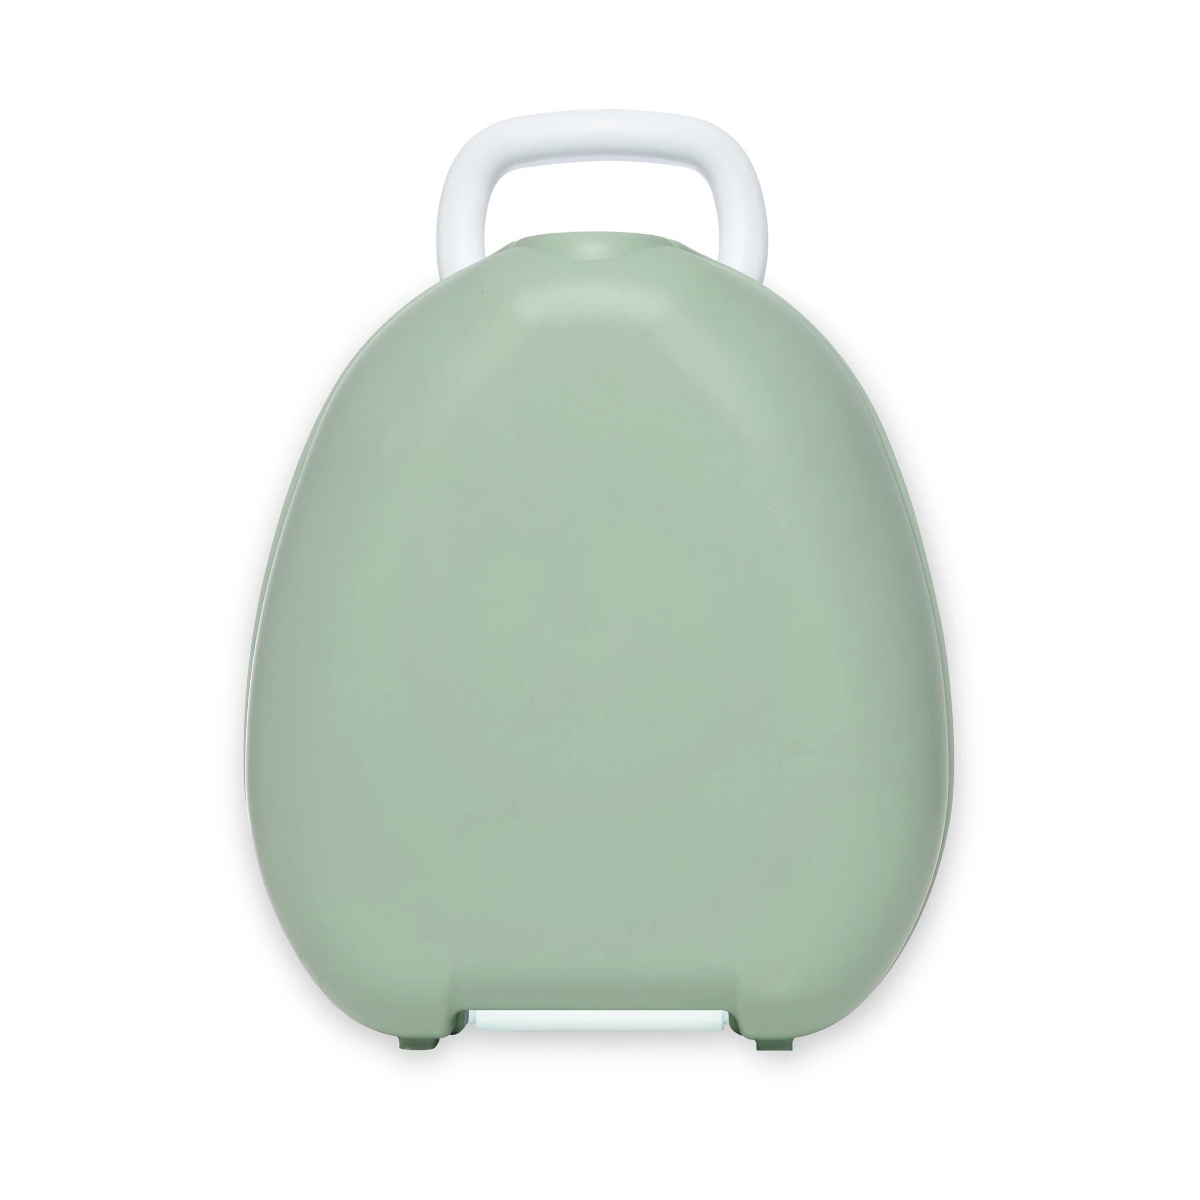 Doppresent pojke - My Carry Potty pastellgrön potta